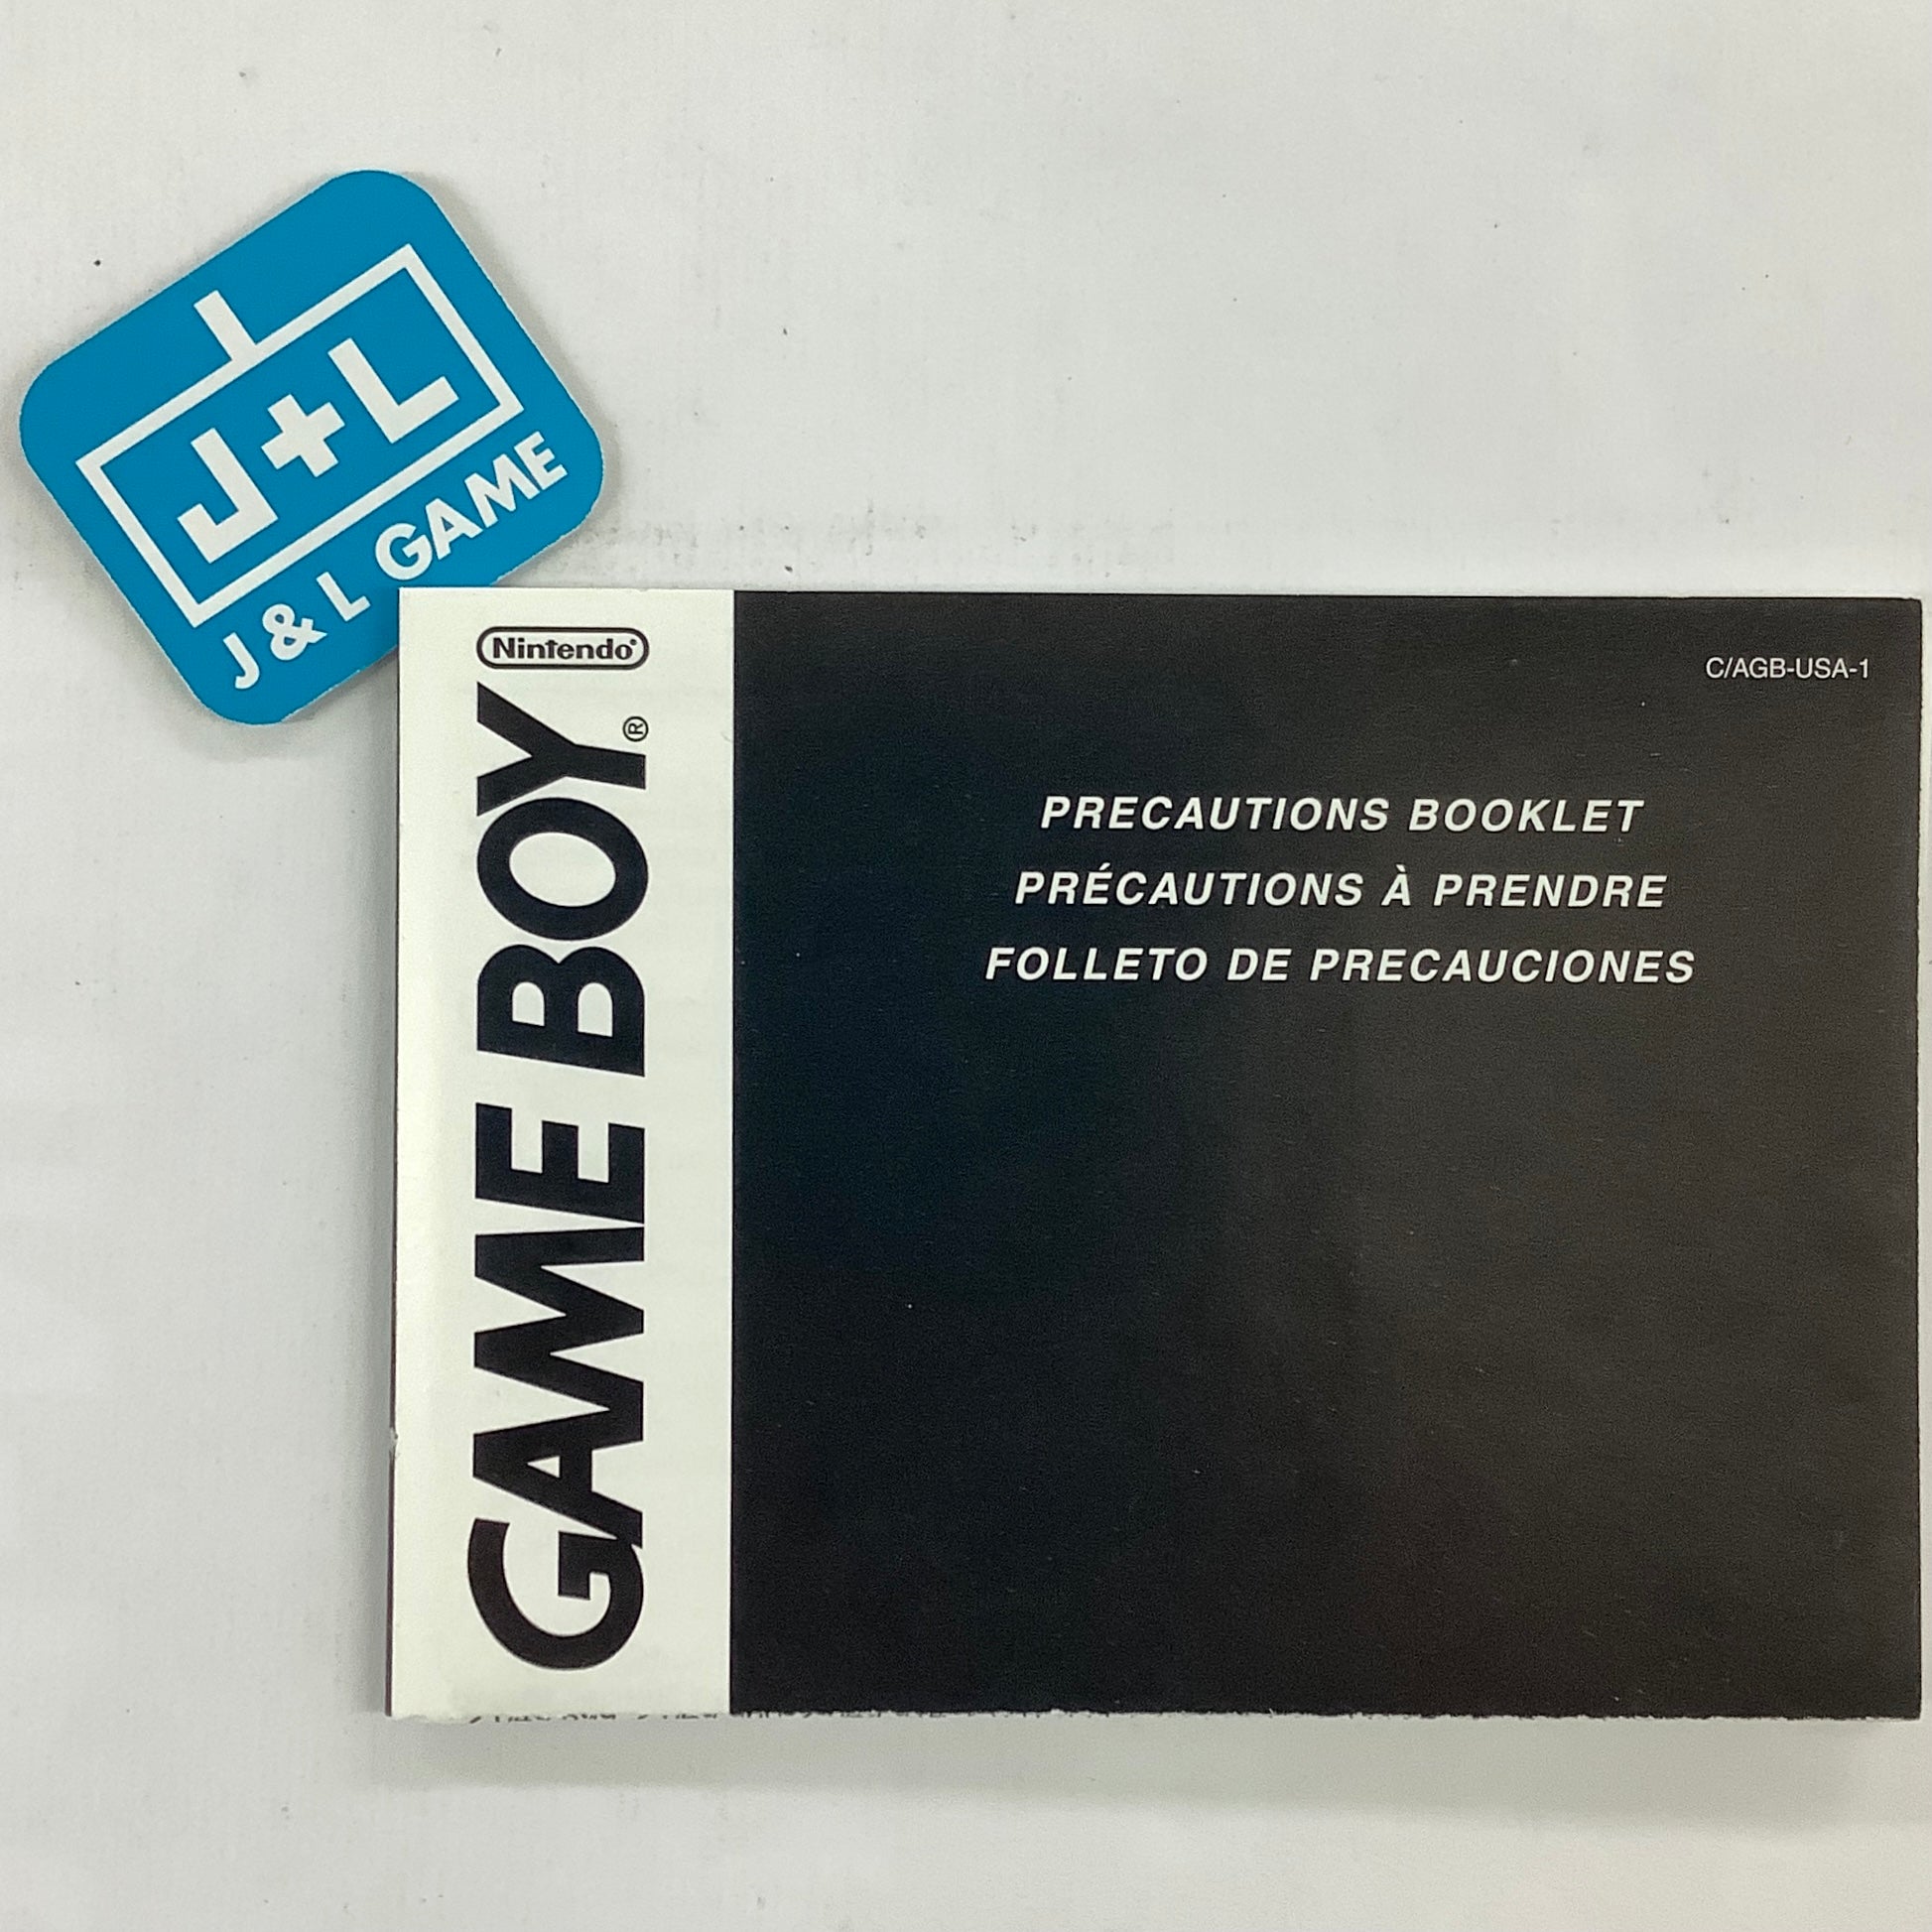 Sigma Star Saga - (GBA) Game Boy Advance [Pre-Owned] Video Games Namco   